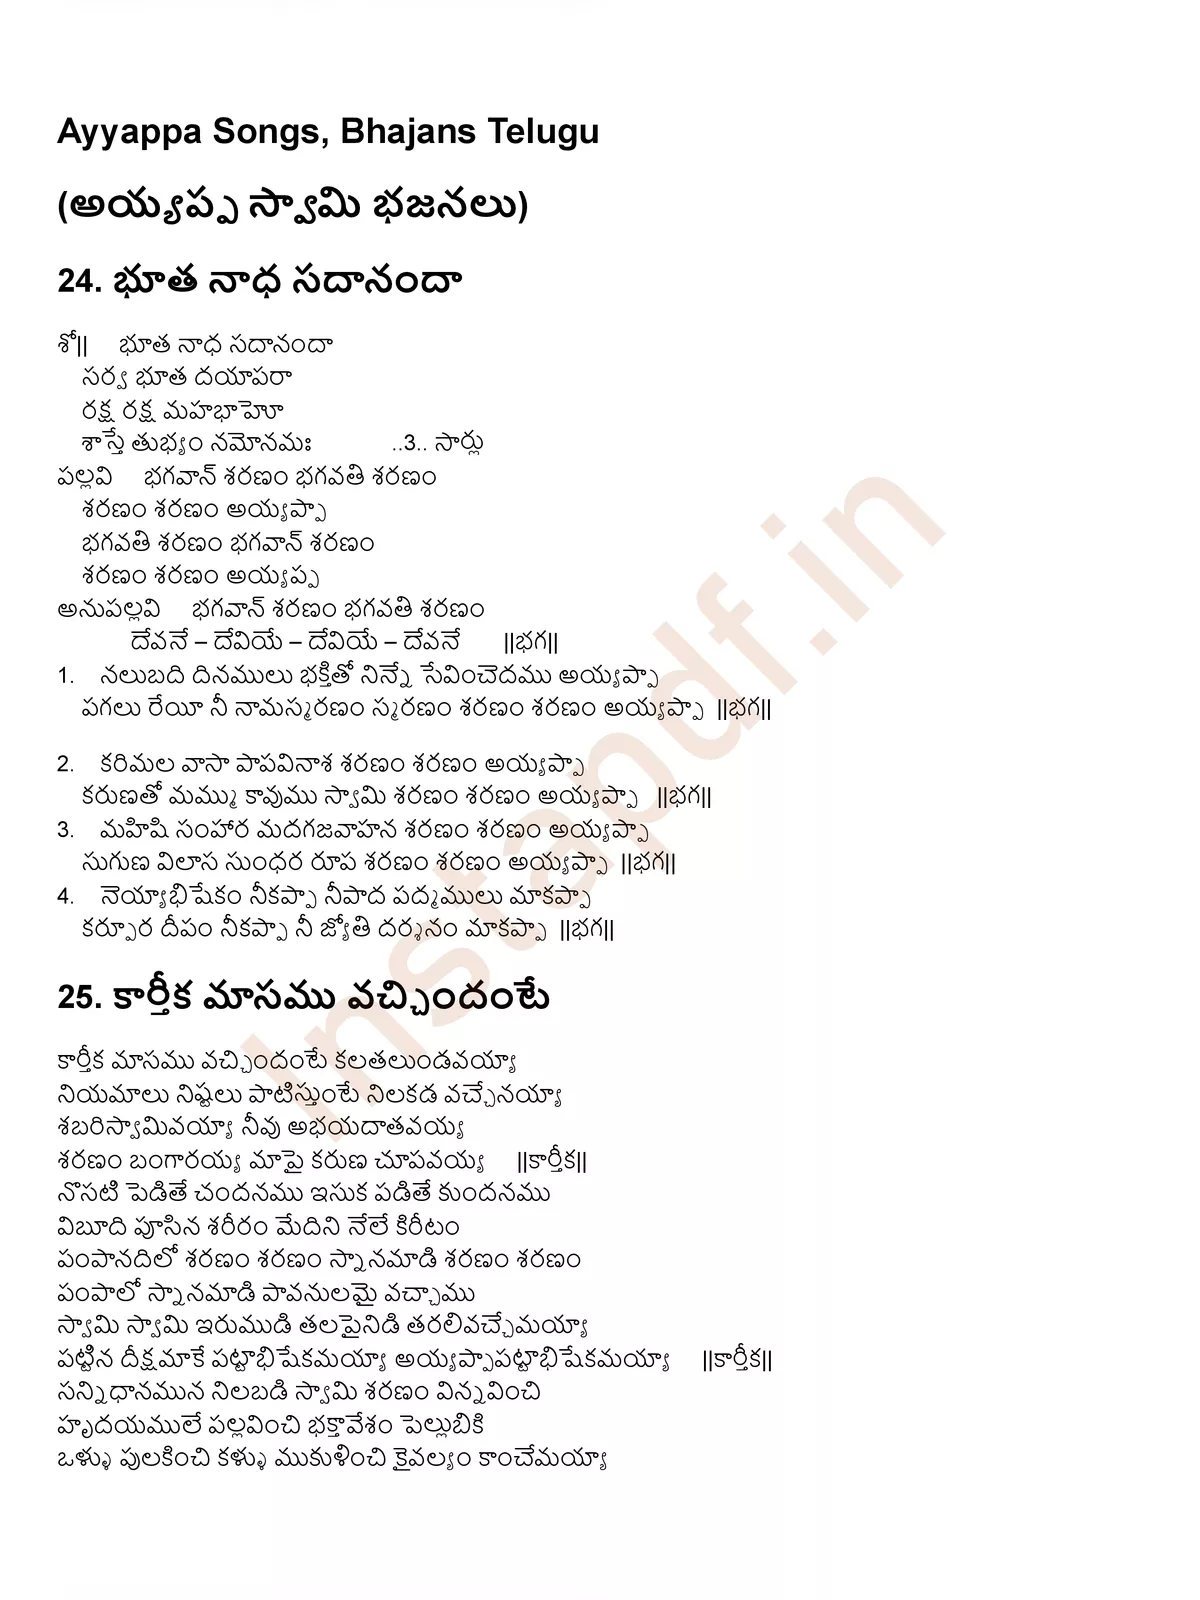 Ayyappa Bhajana Songs Telugu